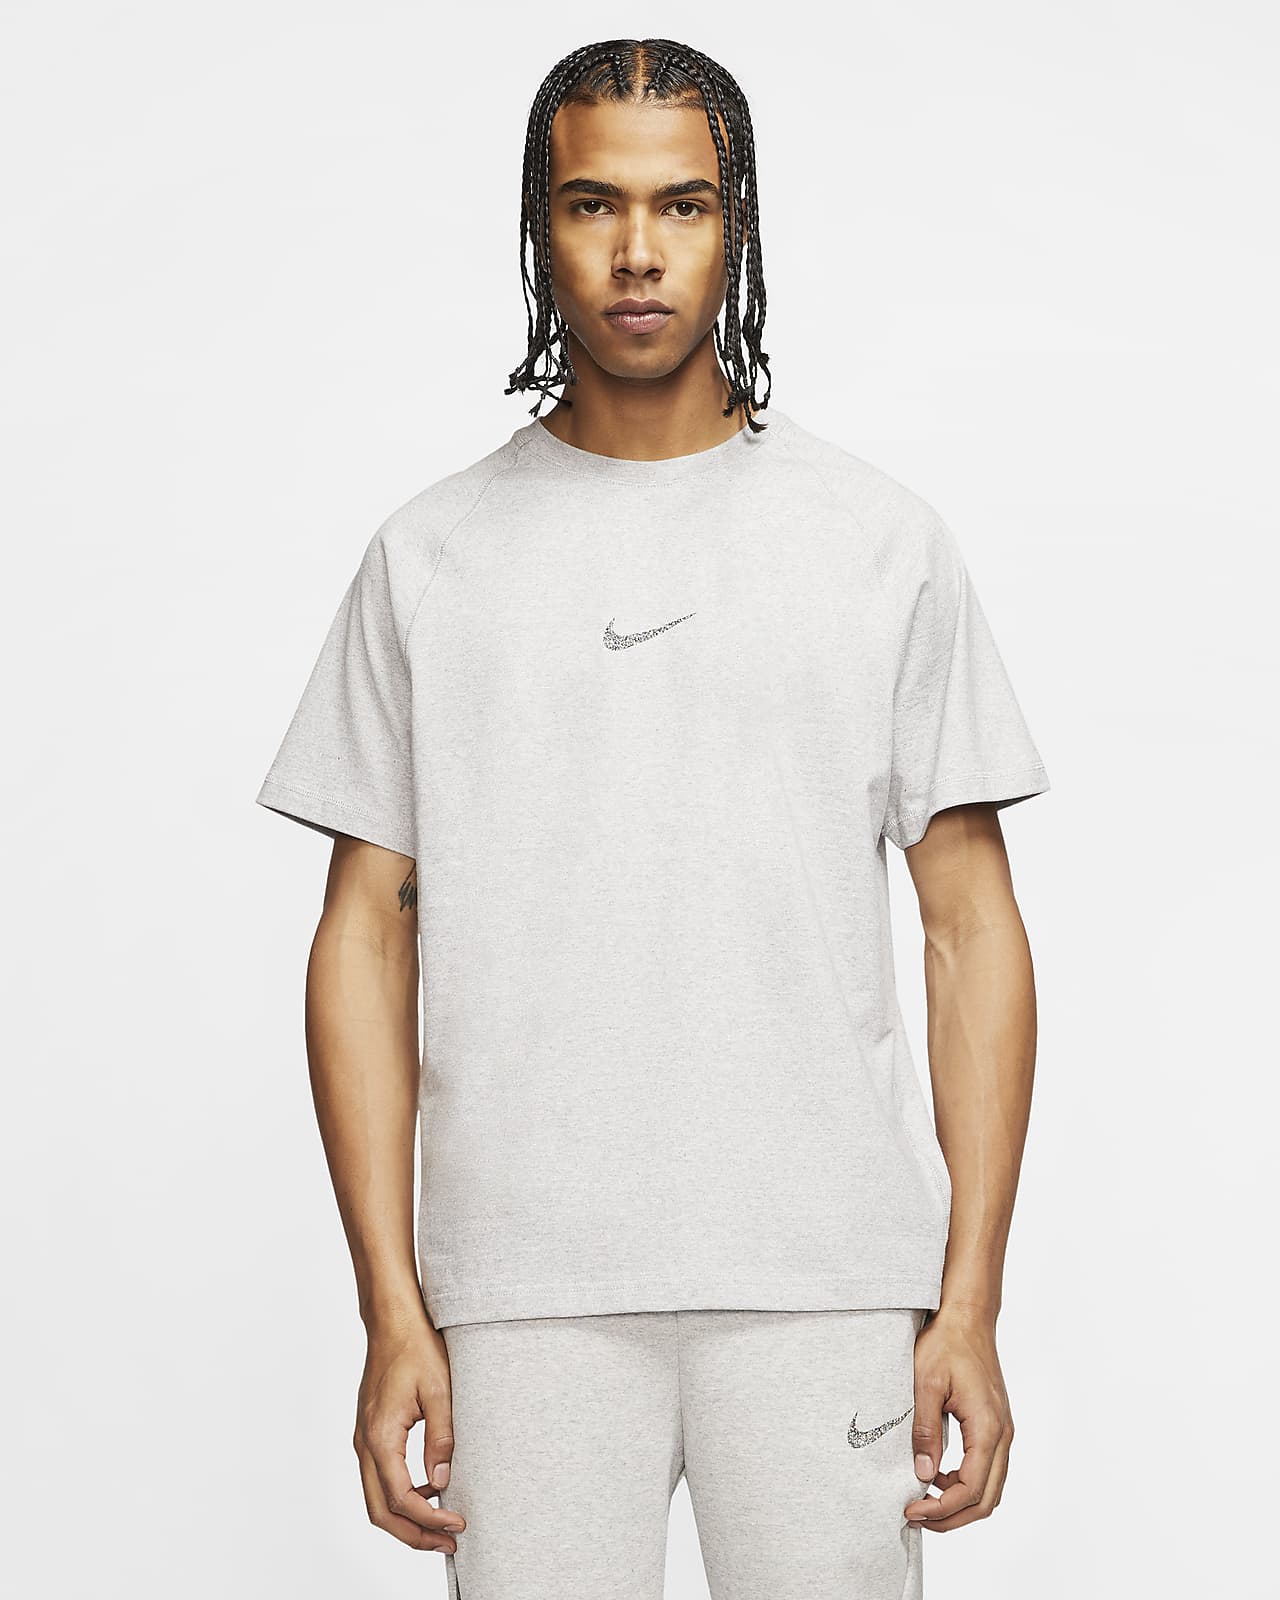 Nike 50 Men's Short-Sleeve Top. Nike ID